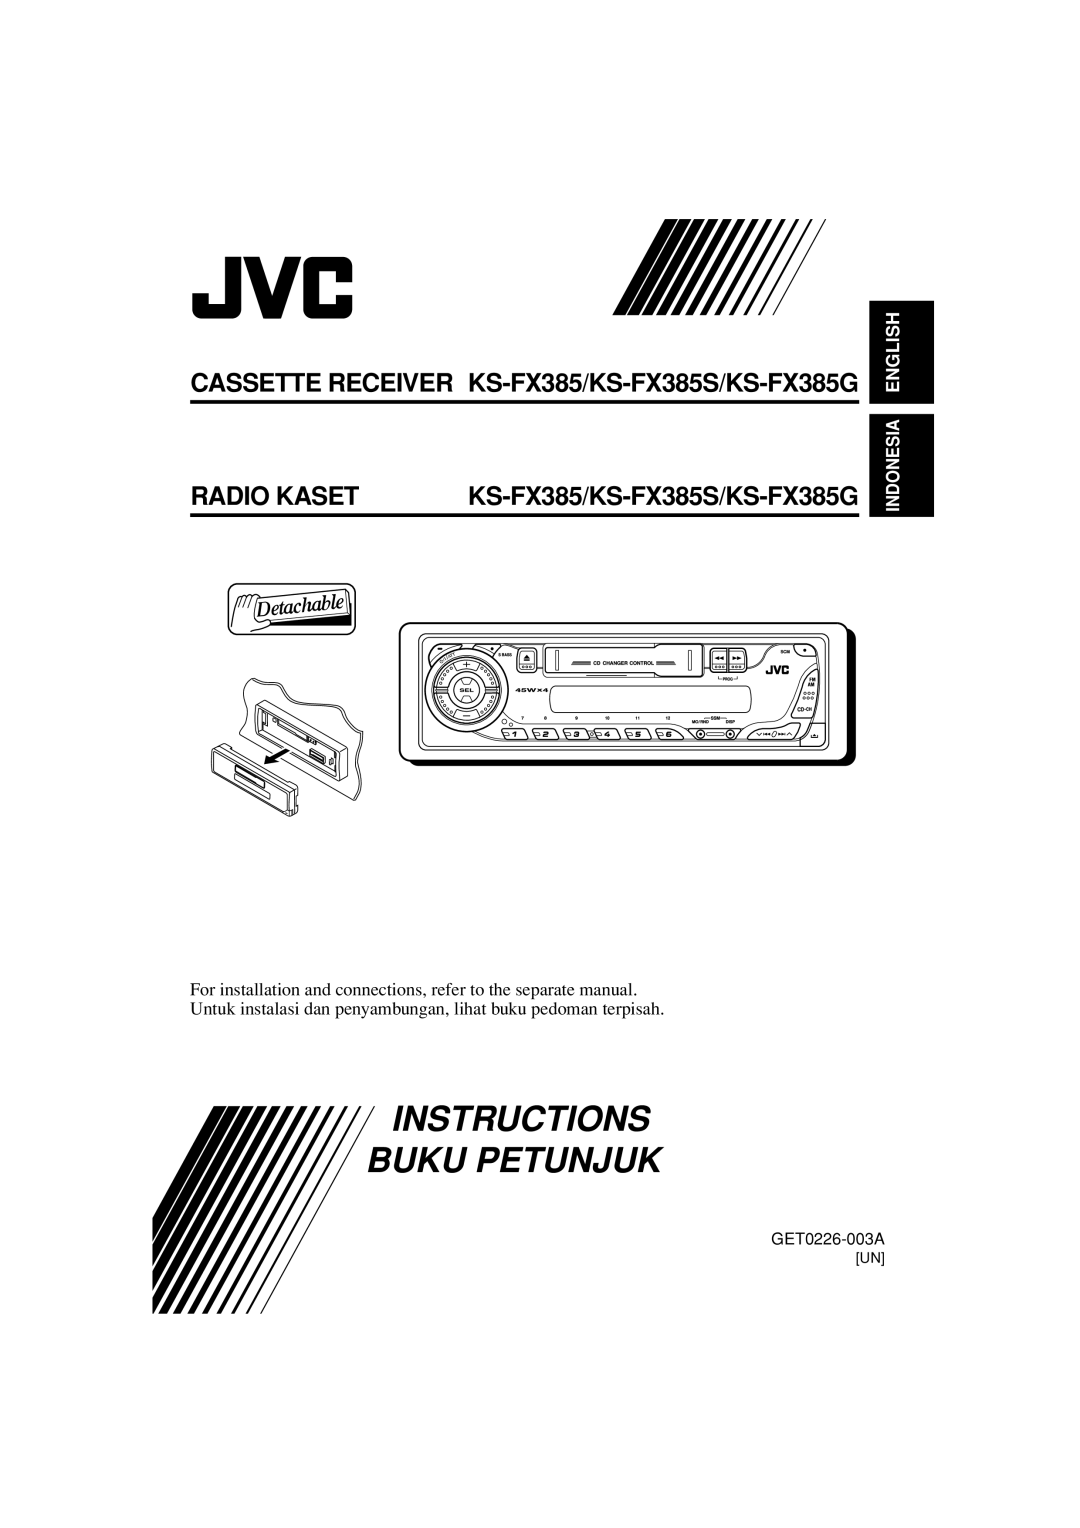 JVC manual Instructions Buku Petunjuk, Radio Kaset, CASSETTE RECEIVER KS-FX385/KS-FX385S/KS-FX385G, English, Indonesia 